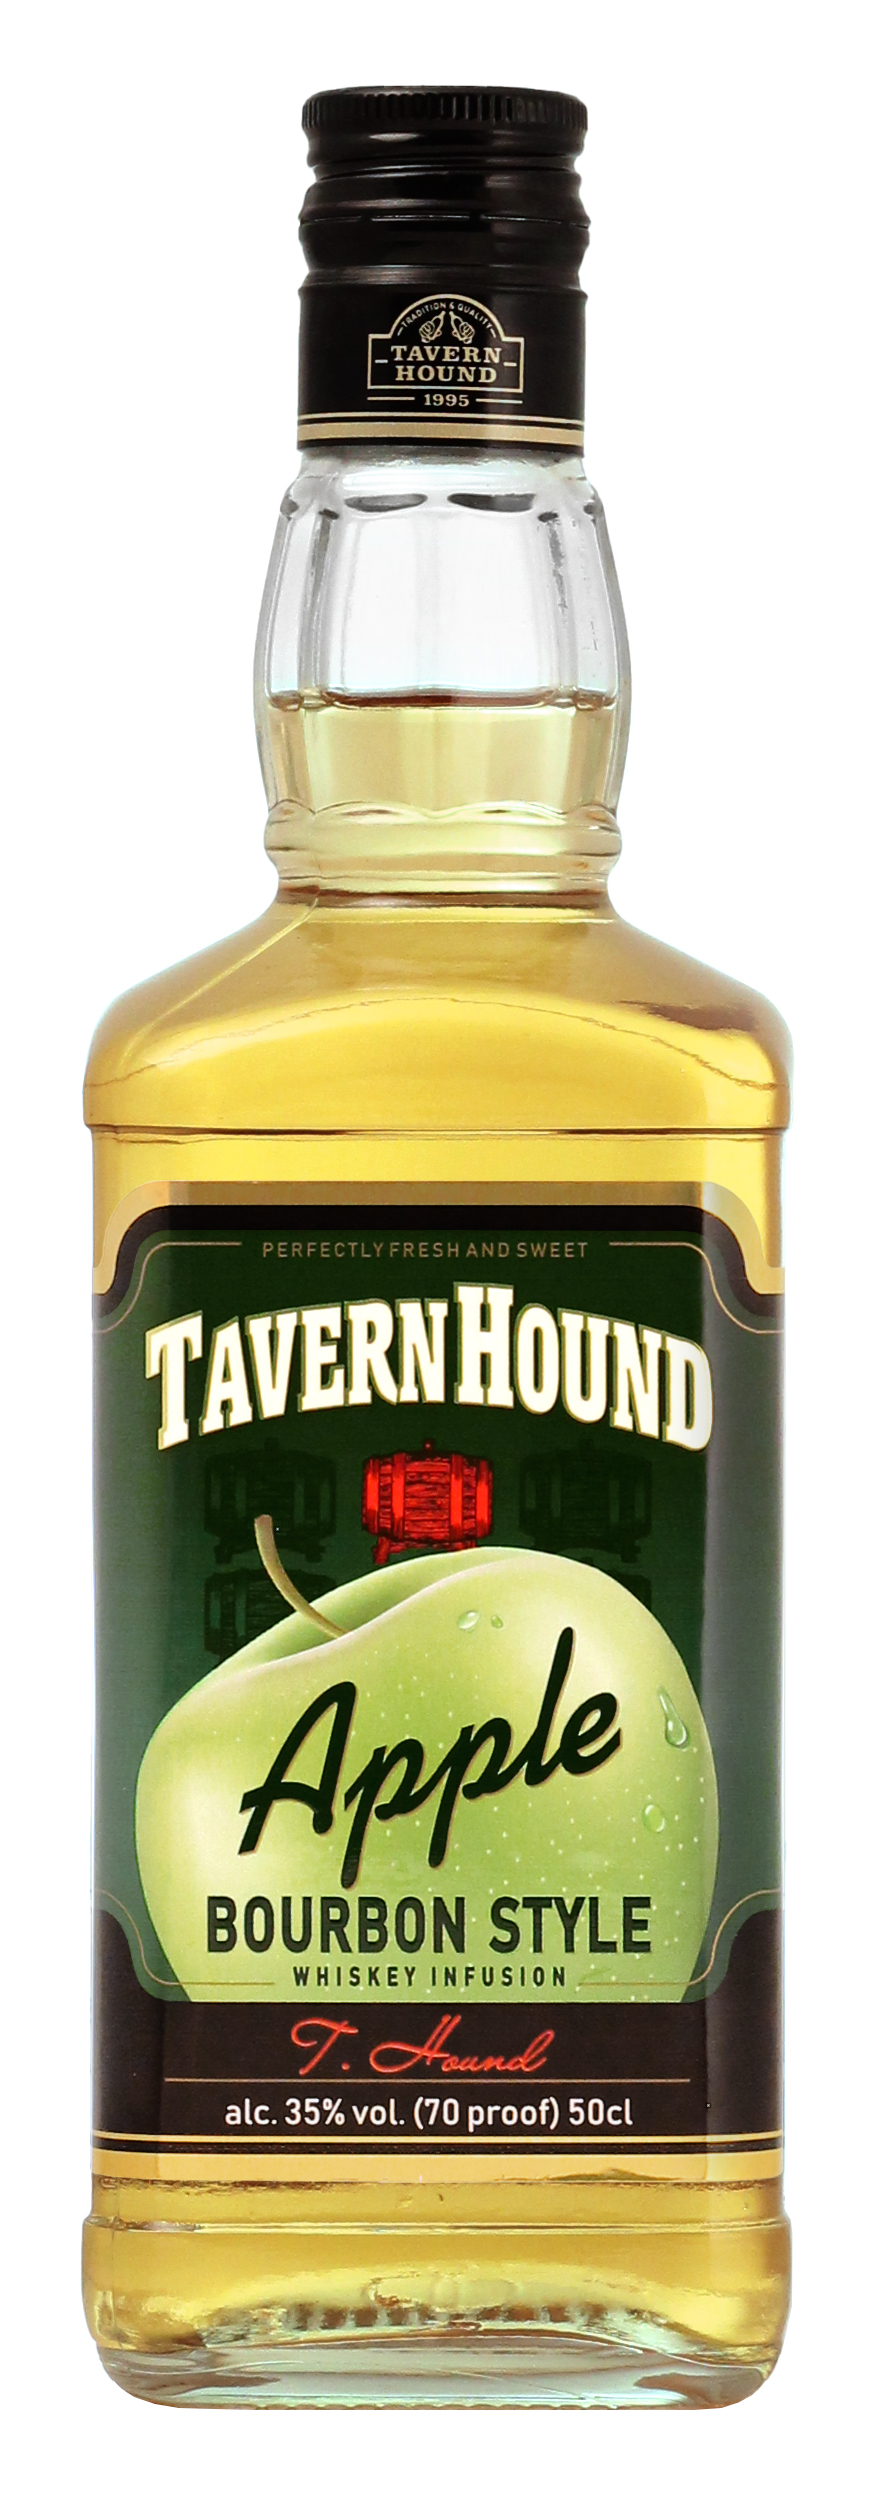 Таверн хаунд яблоко на основе виски бурбон стайл 0,5 л 35%